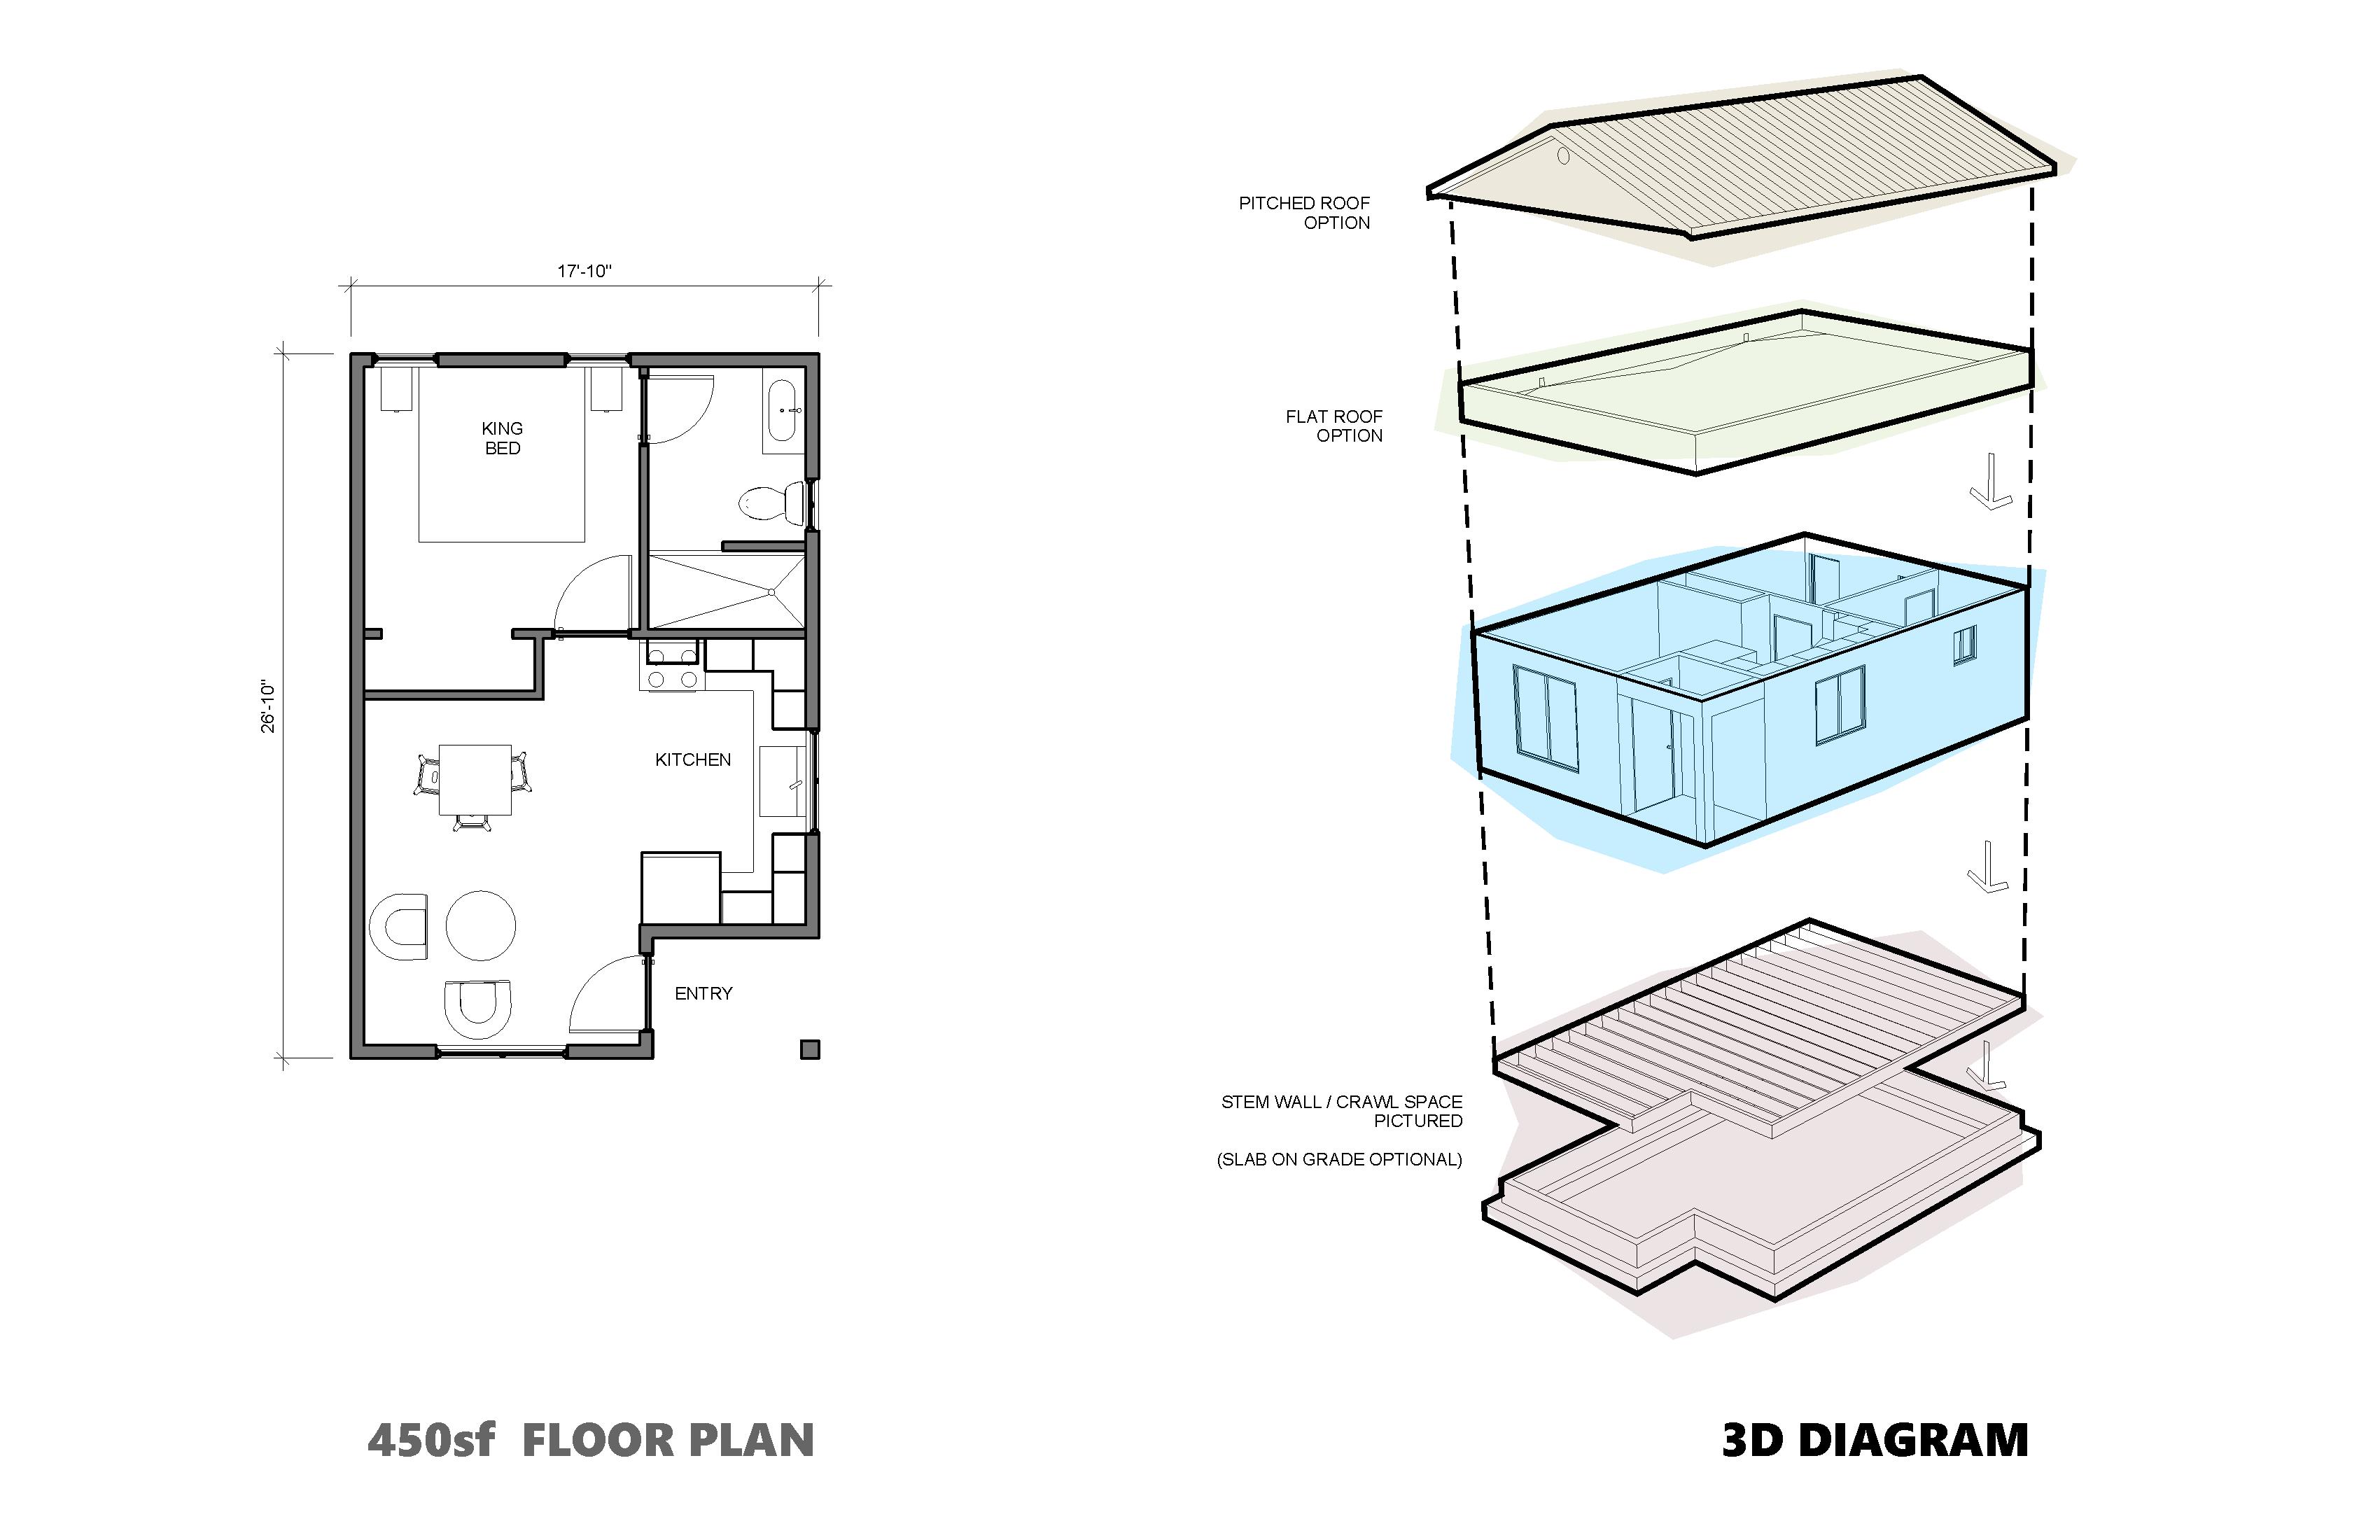 450 sq ft casita floor plan and 3D diagram